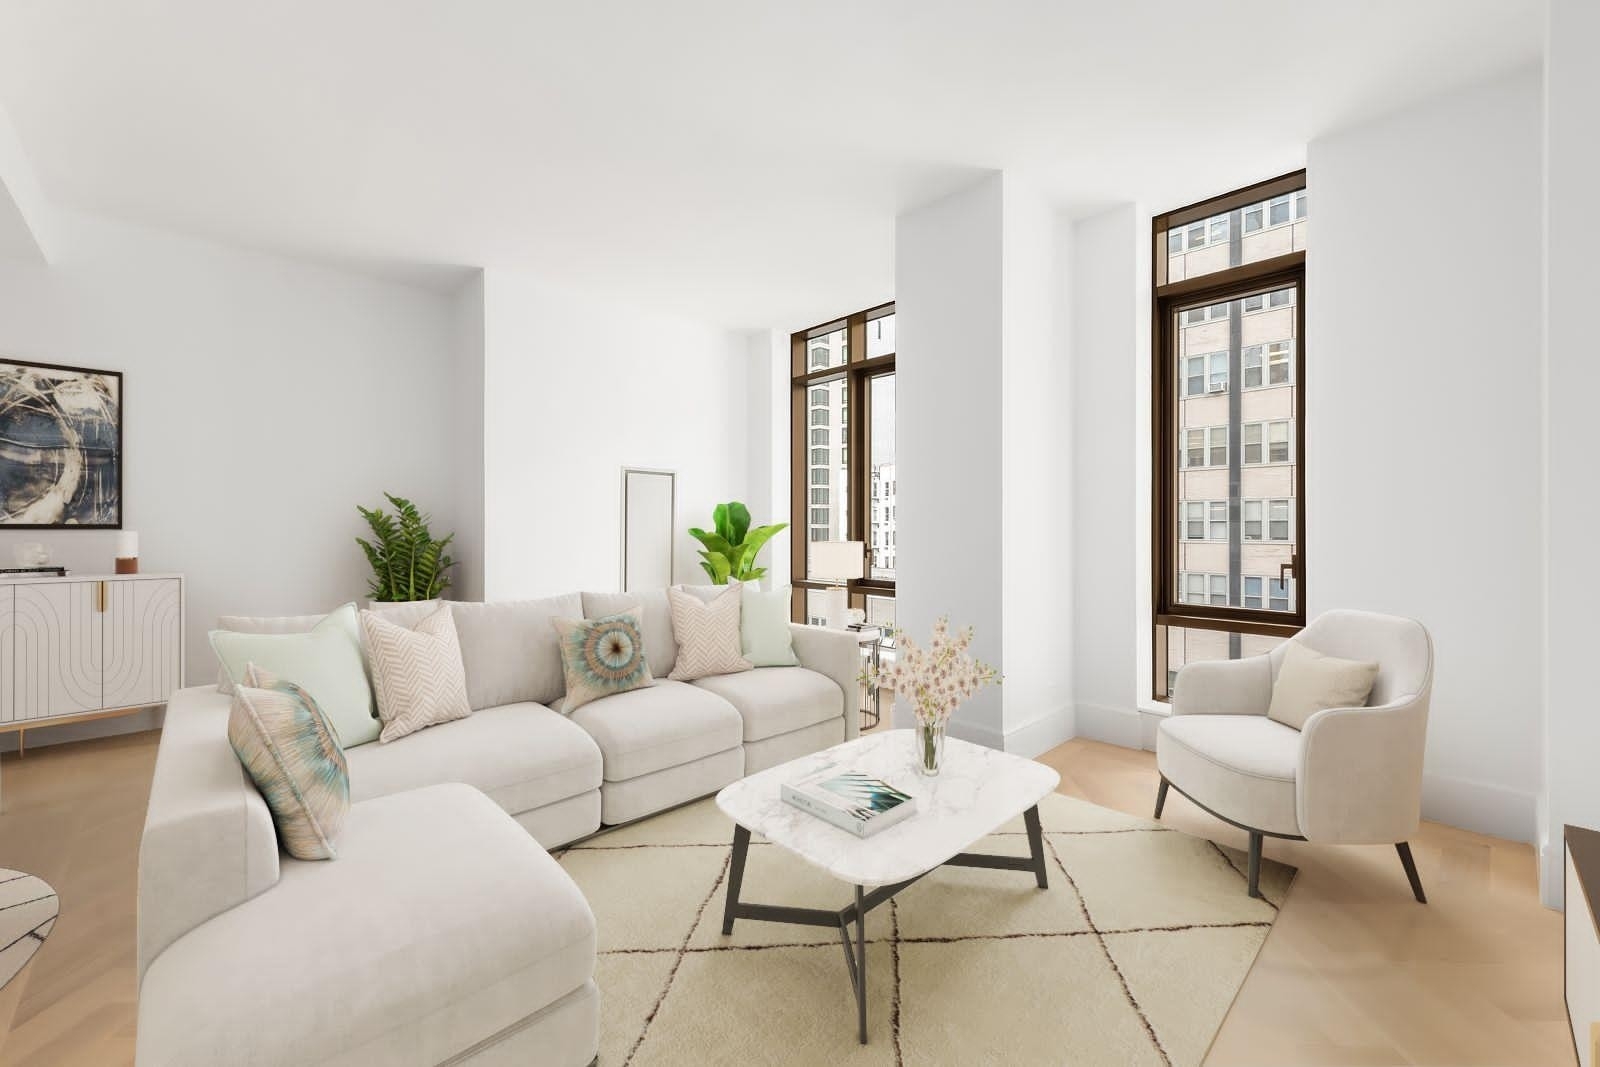 Condominium for Sale at Gramercy Square, 215 E 19TH ST, 4F Gramercy Park, New York, New York 10003